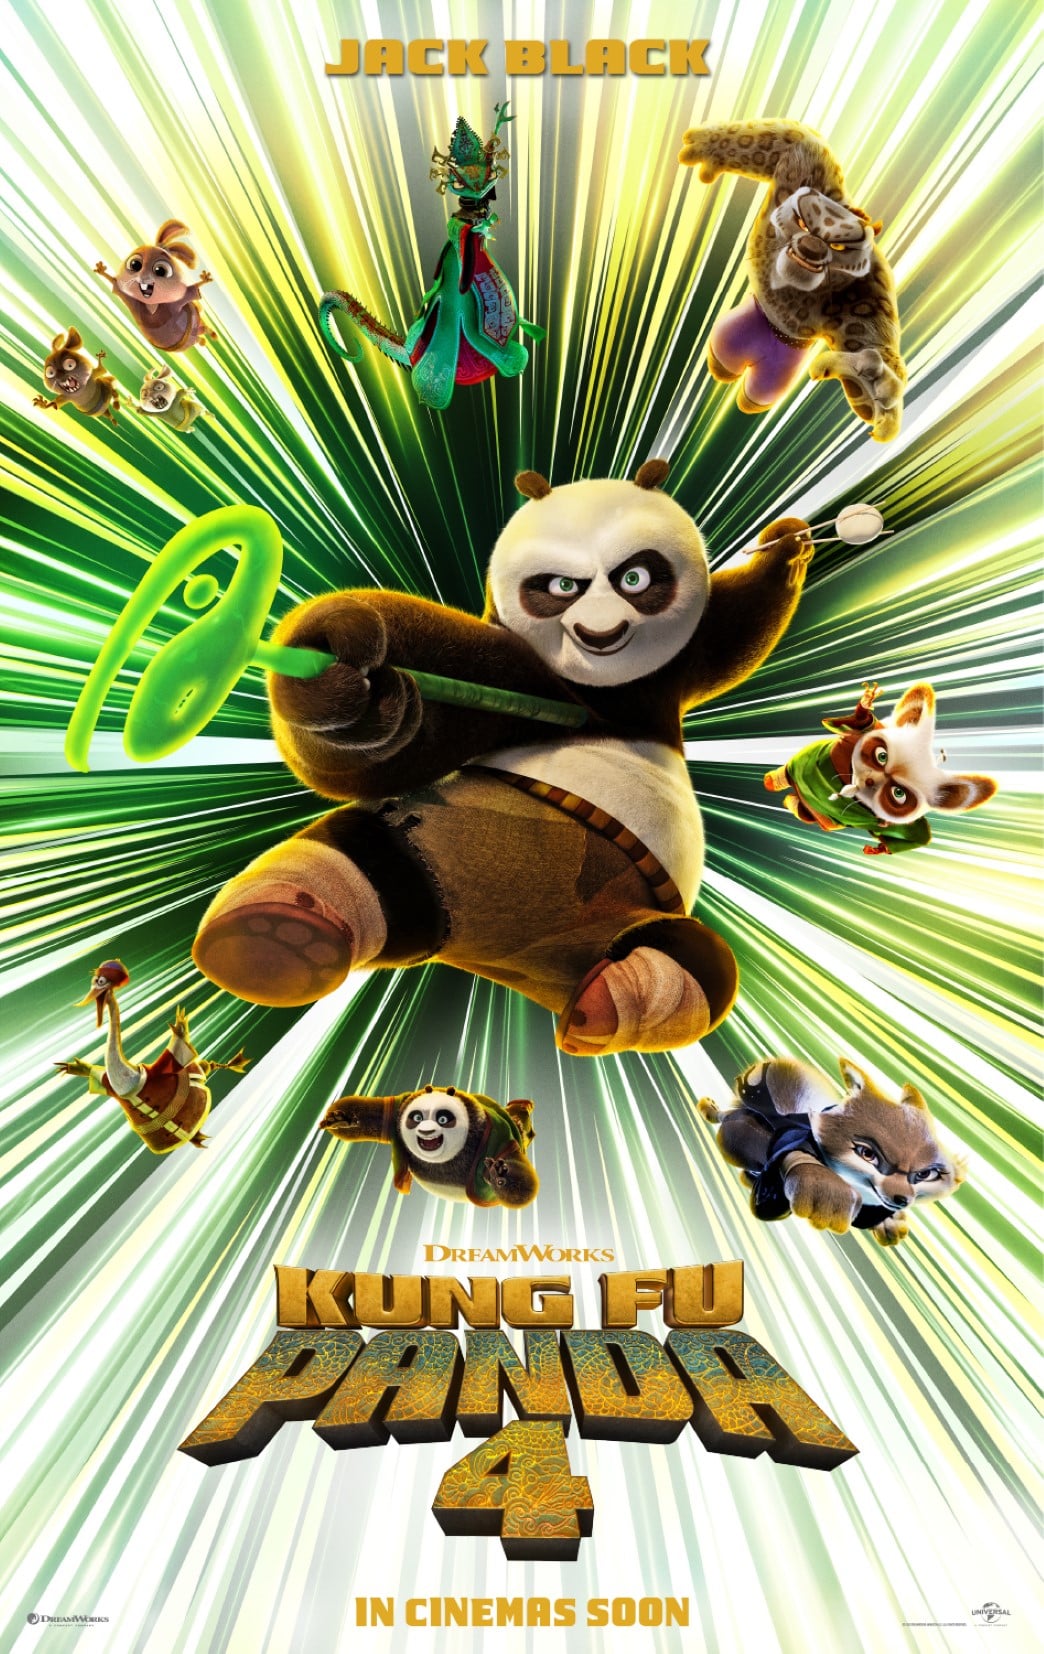 Kung fu panda 4 poster.